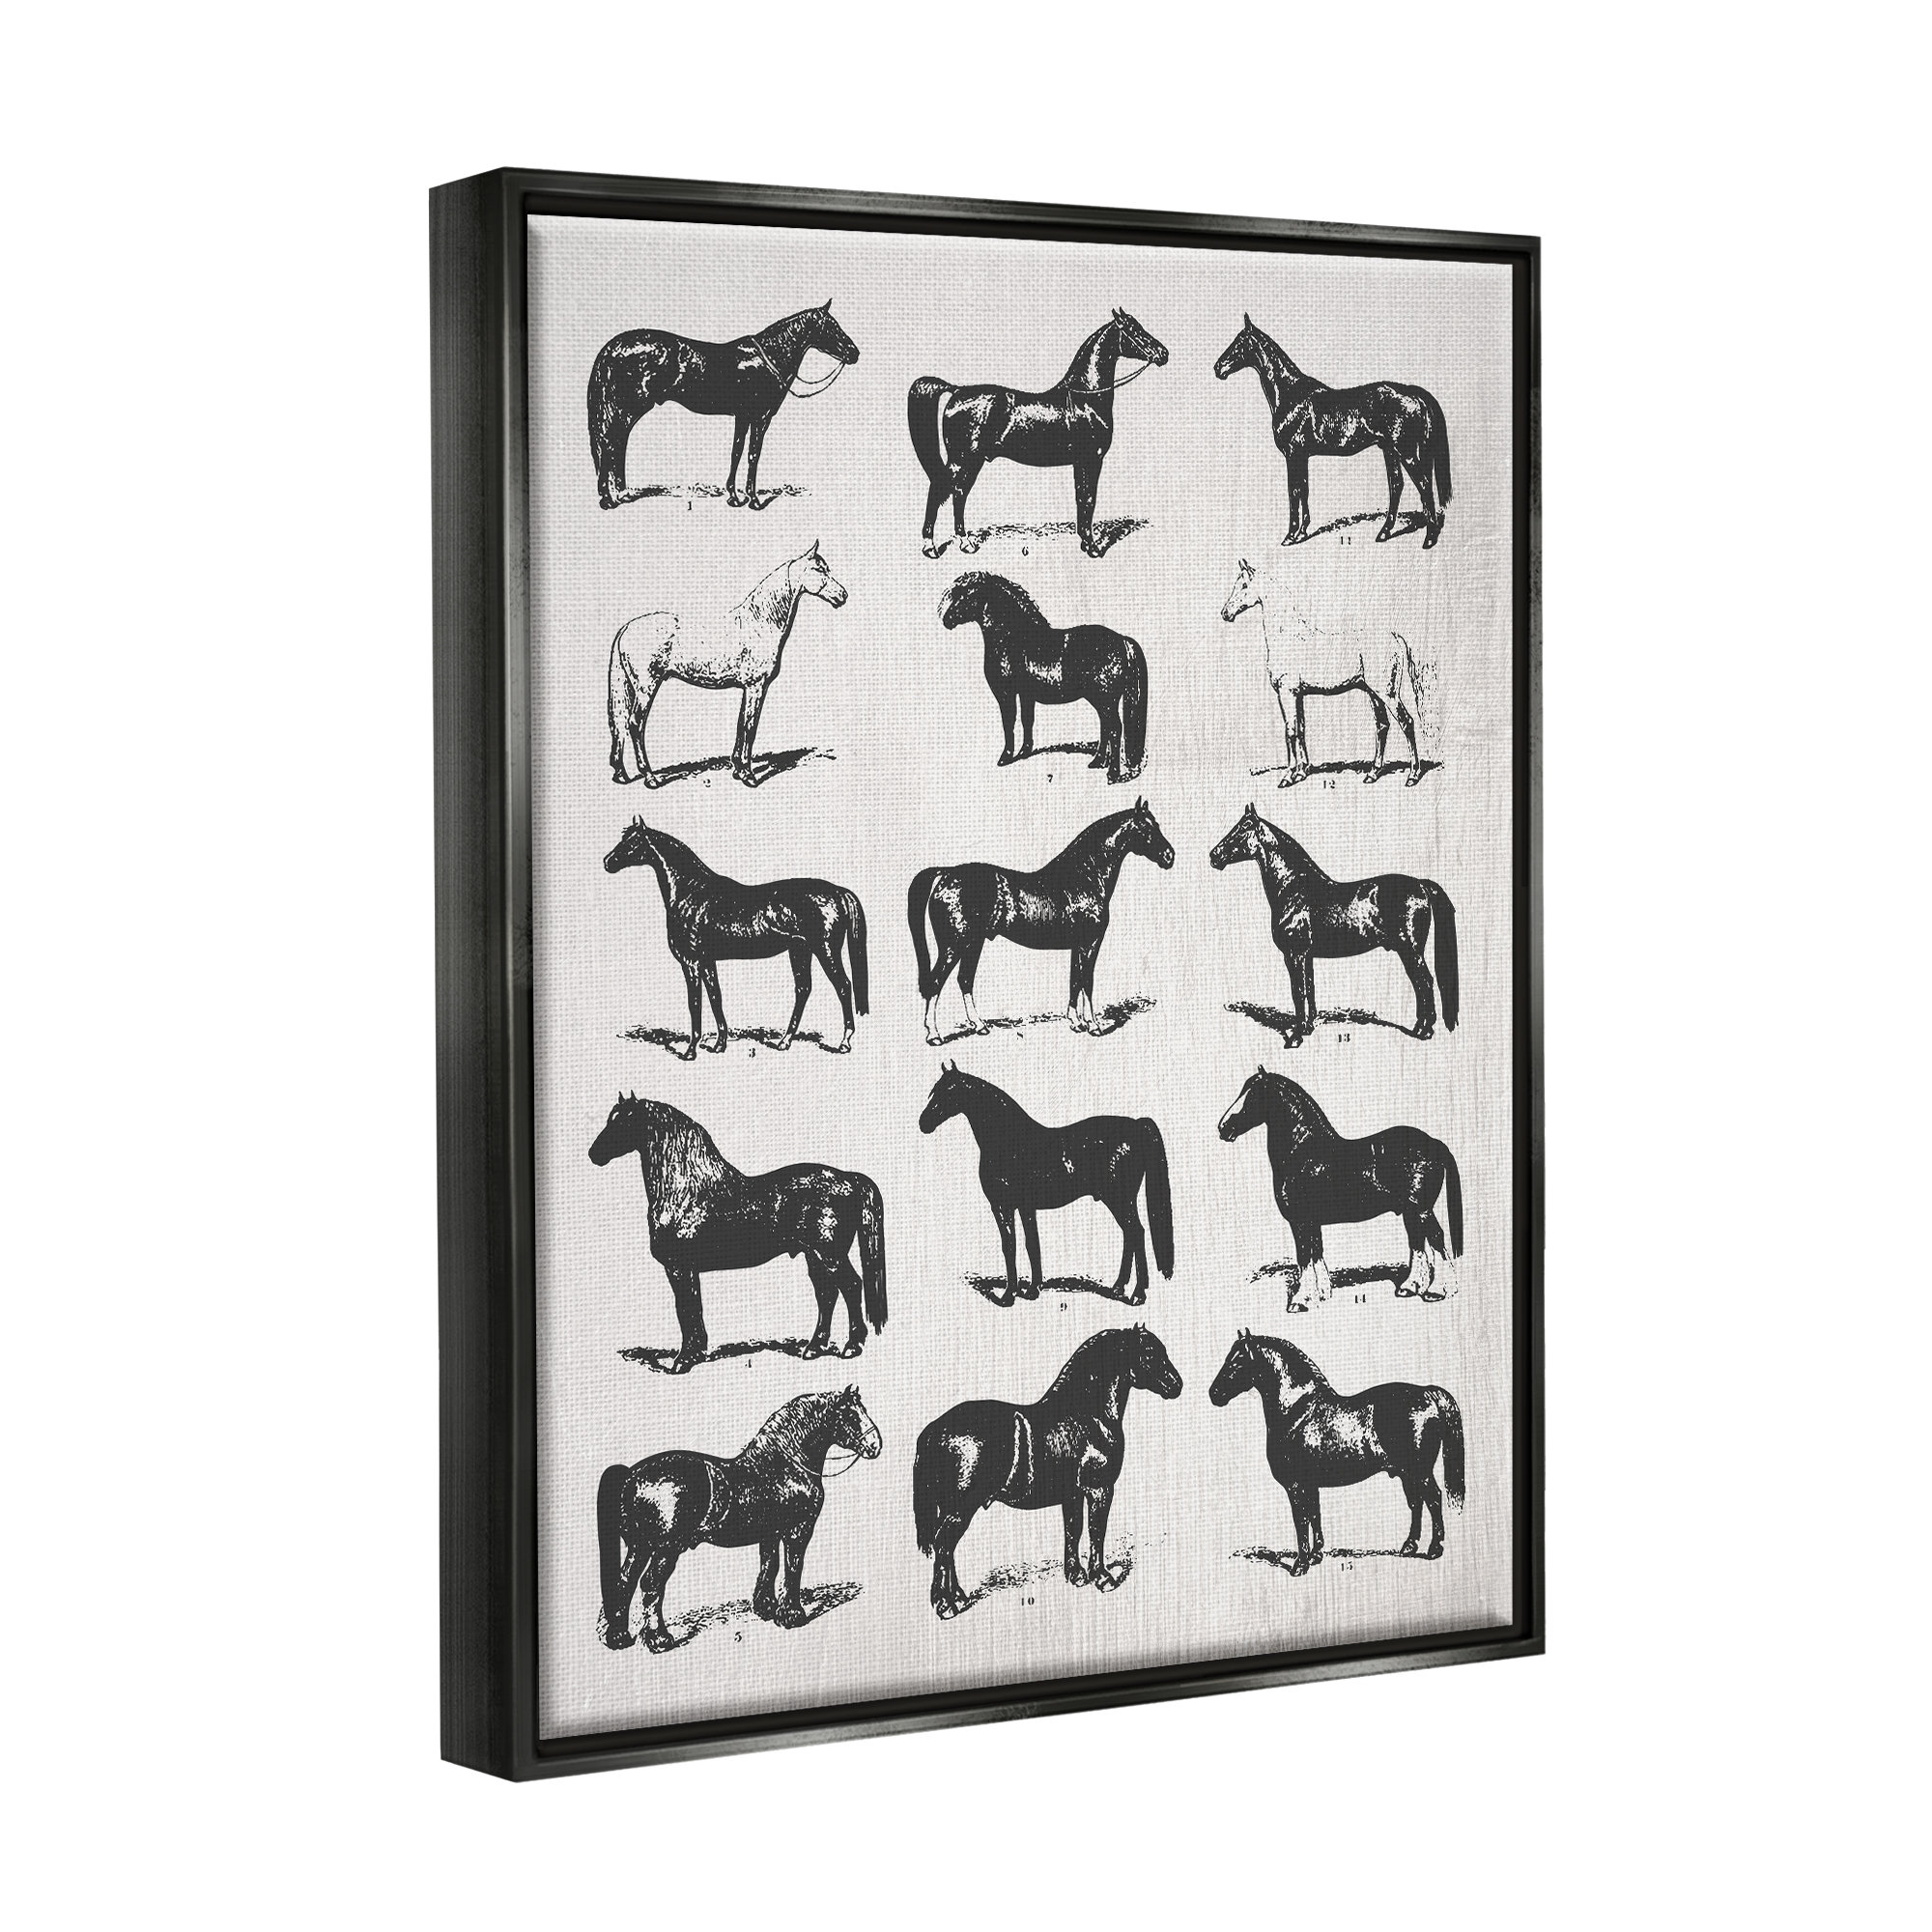 Gracie Oaks Vintage Varied Horse Breeds By Daphne Polselli - Graphic Art On  Canvas | Wayfair